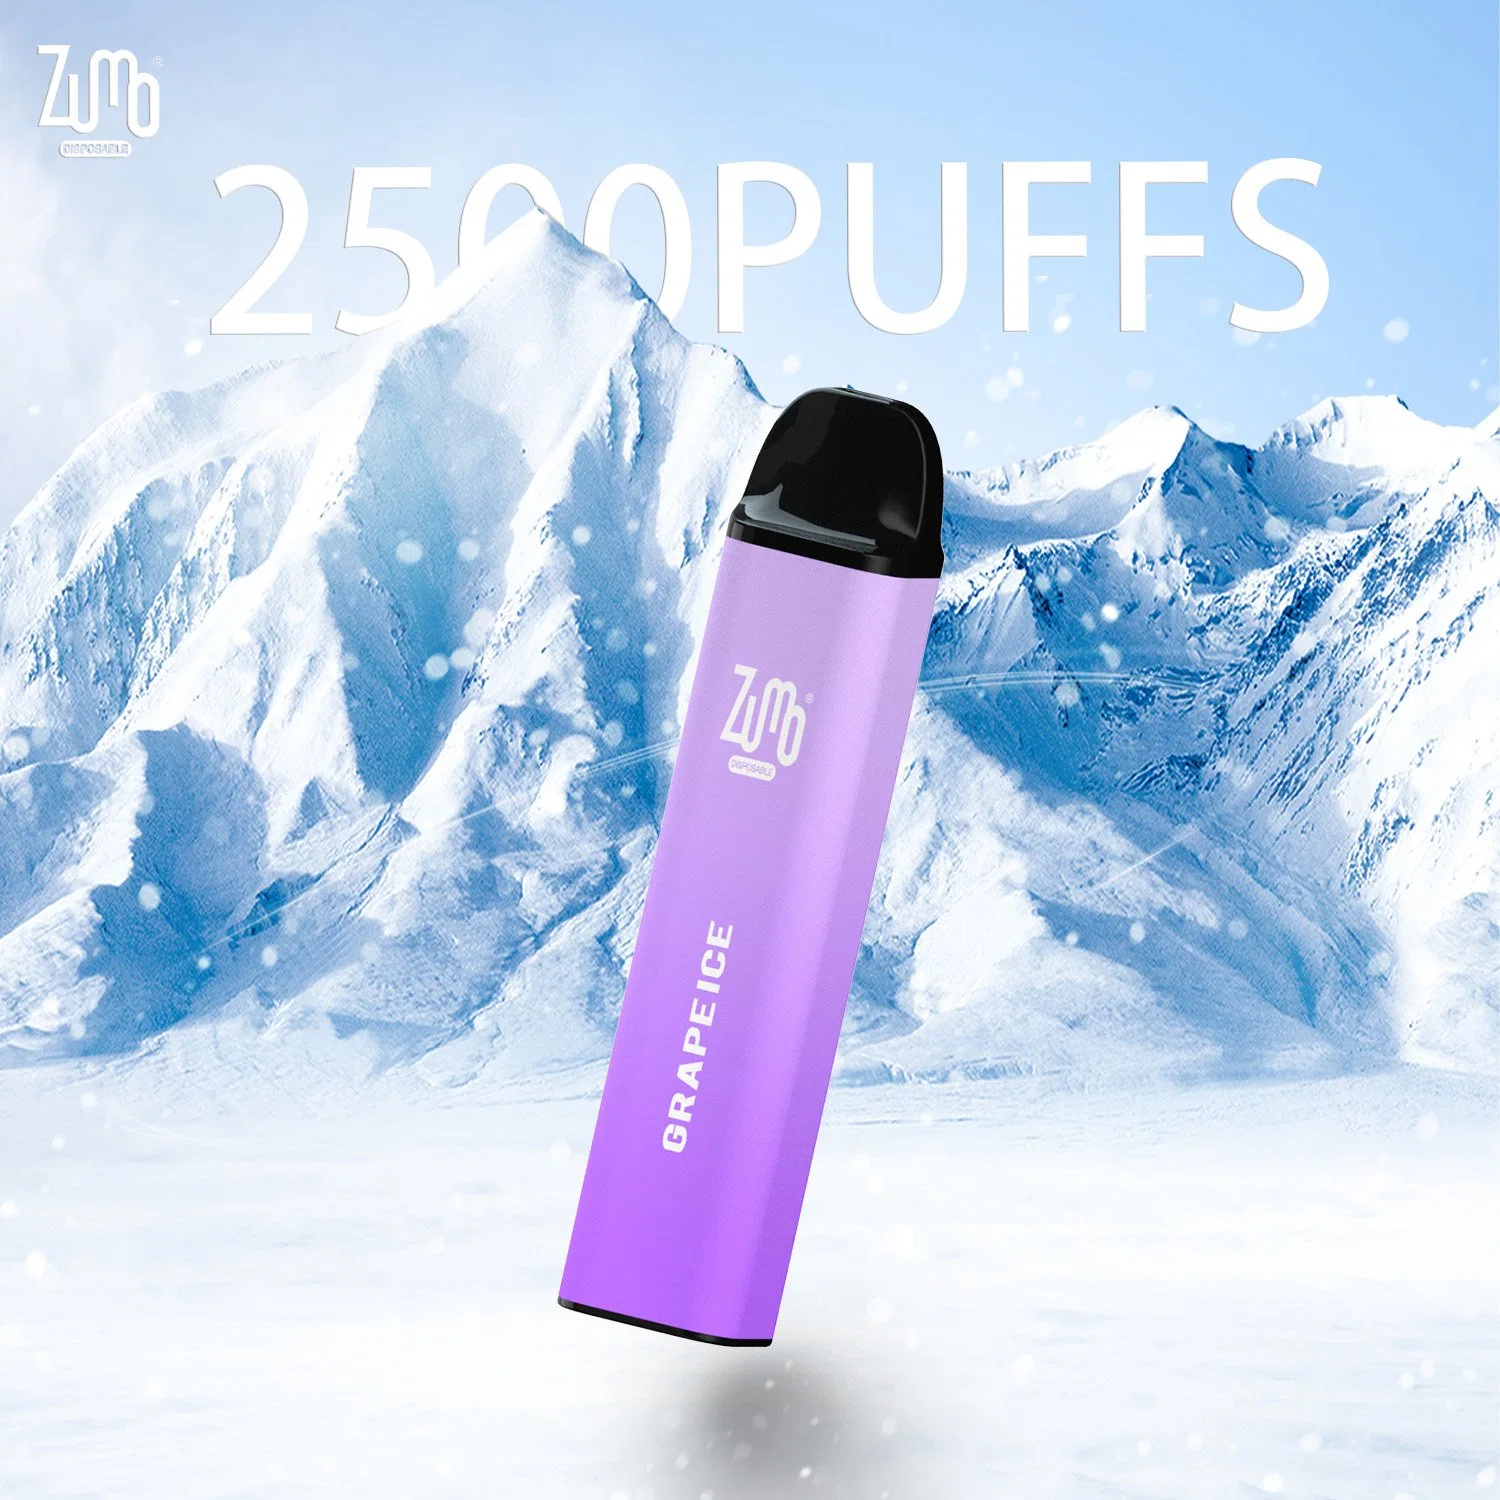 SD Vape Hot Selling Original Zumo Maxx 6ml E-Juice 2500 Puffs Disposable Vape Pen